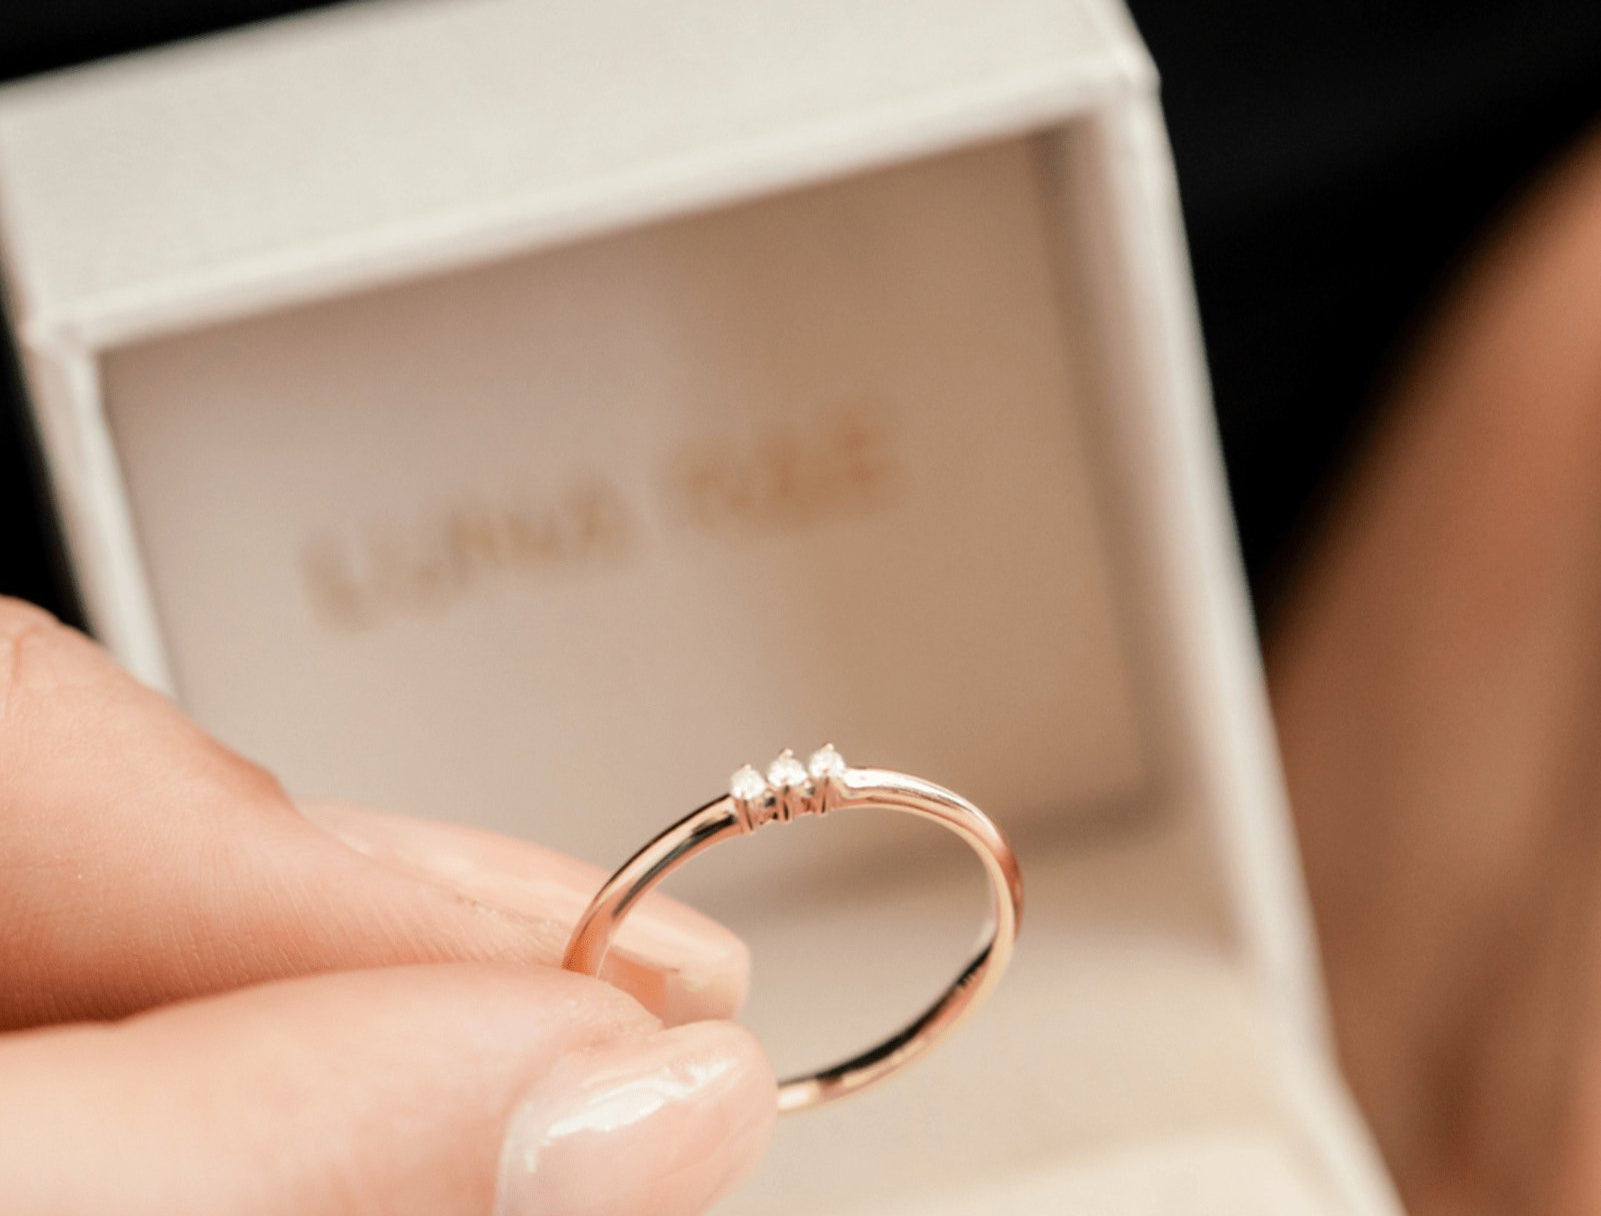 Picture of Luna Rae Solid 9k Gold Juliette Ring